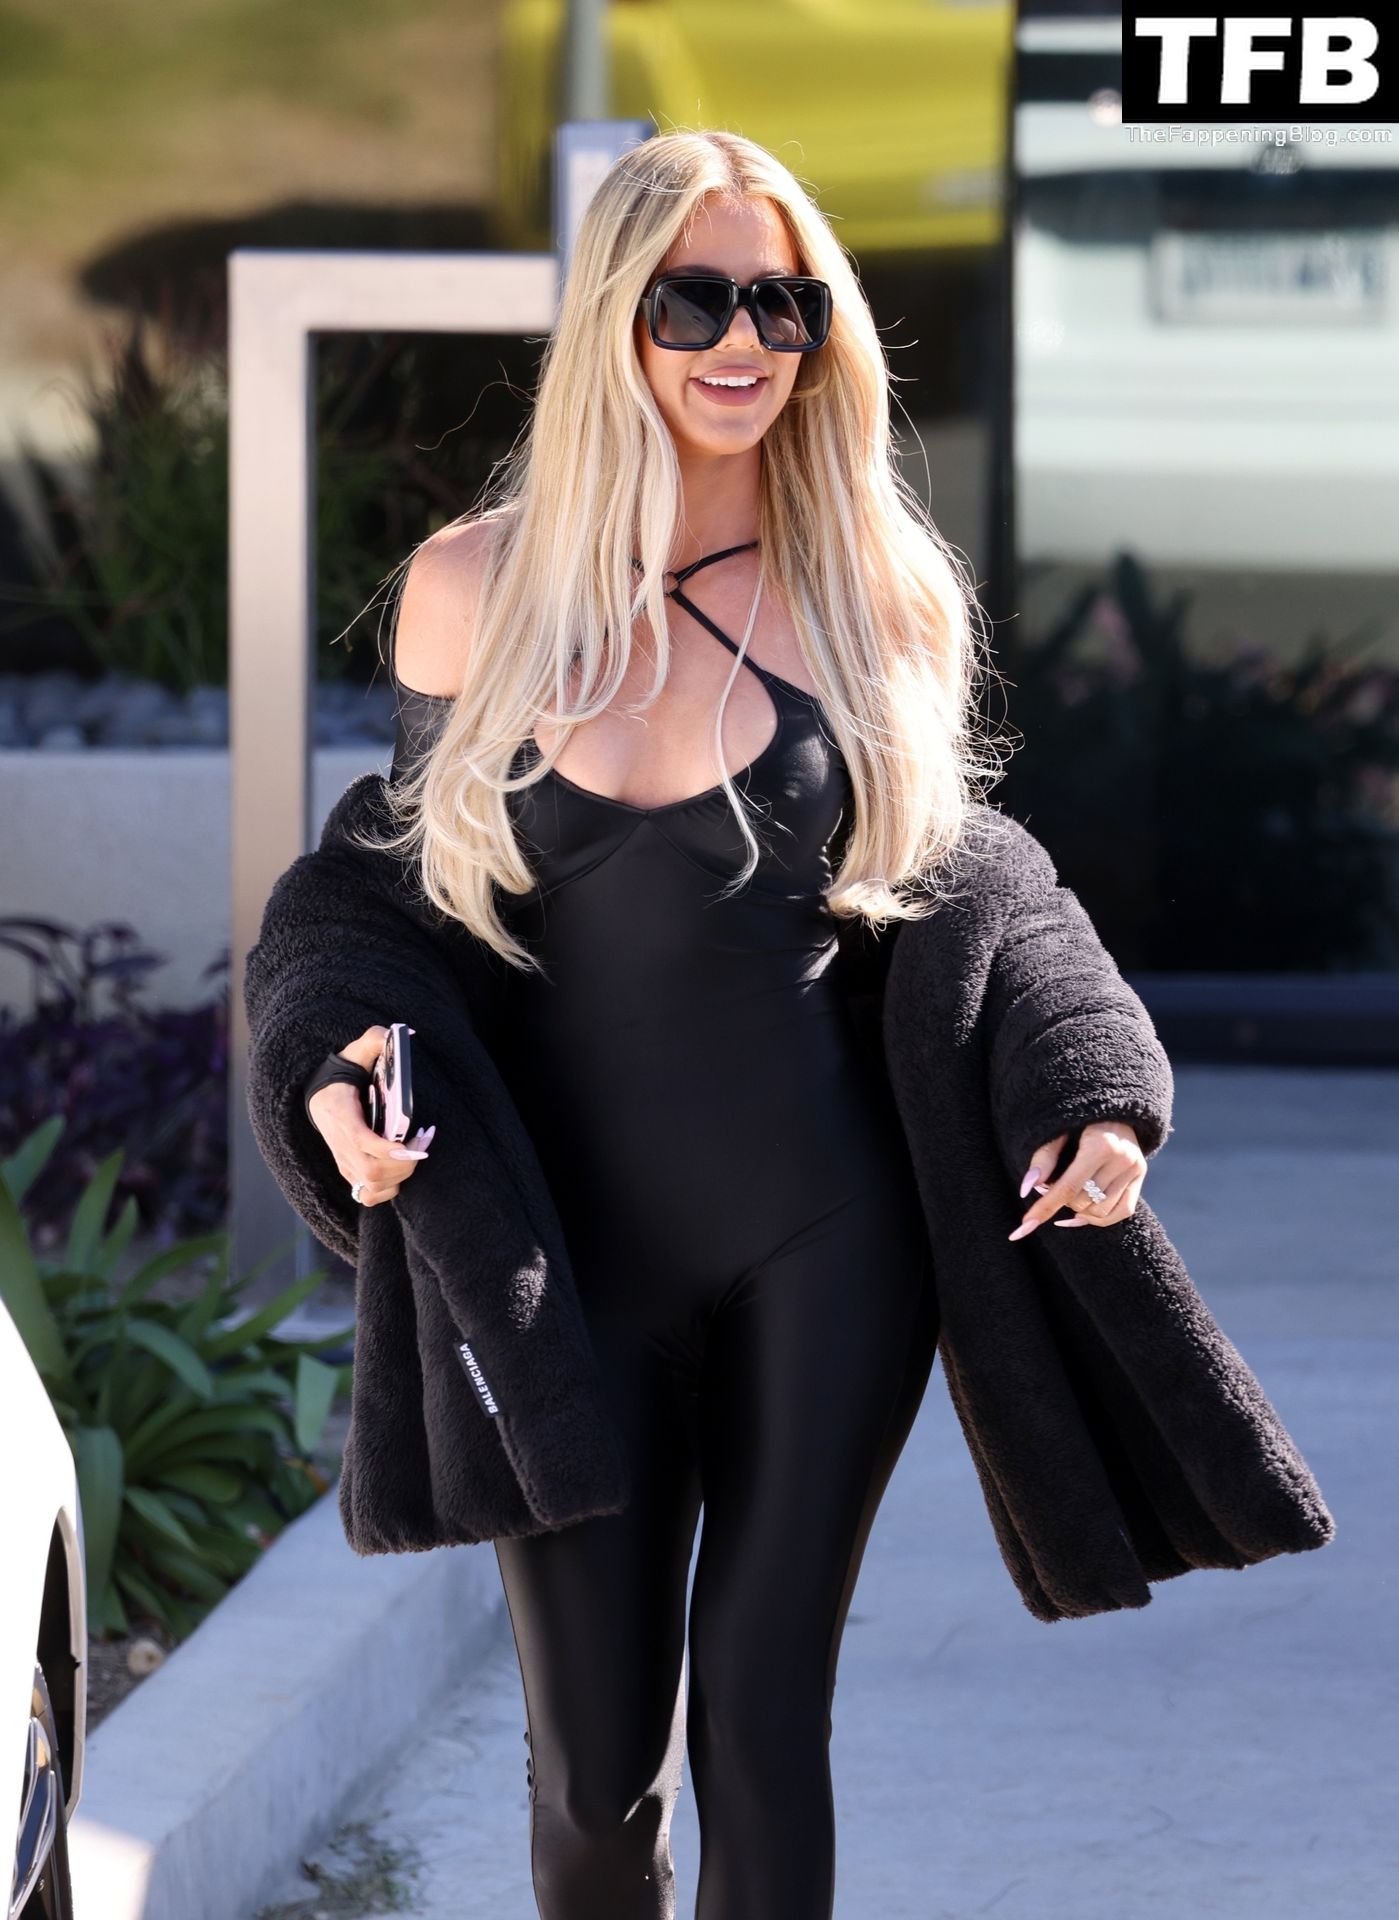 Khloe-Kardashian-Sexy-The-Fappening-Blog-3.jpg